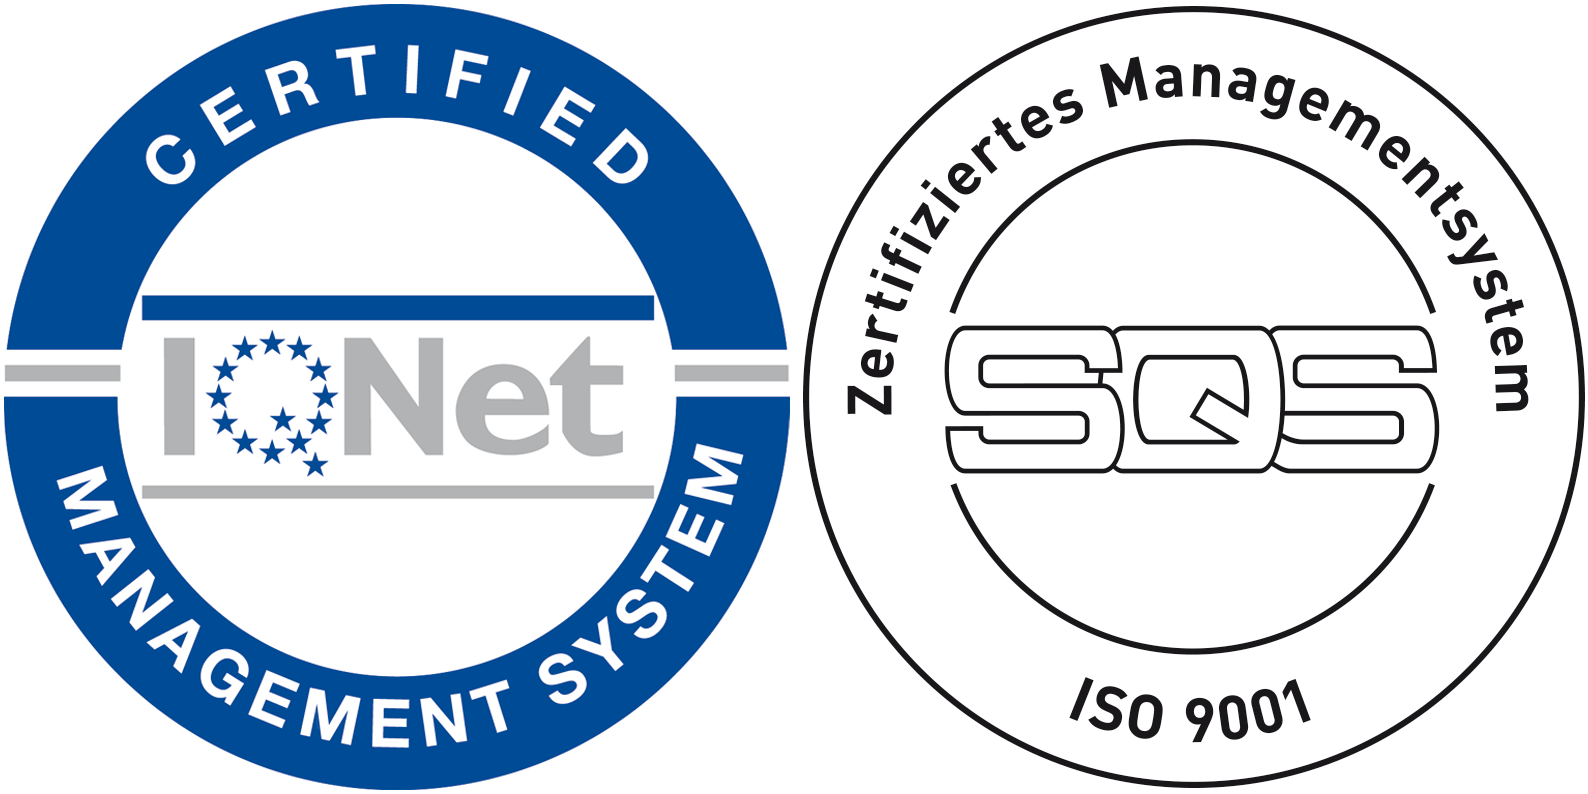 Iso-Zertifizierungen: Certified Management System IQNet, ISO 9001